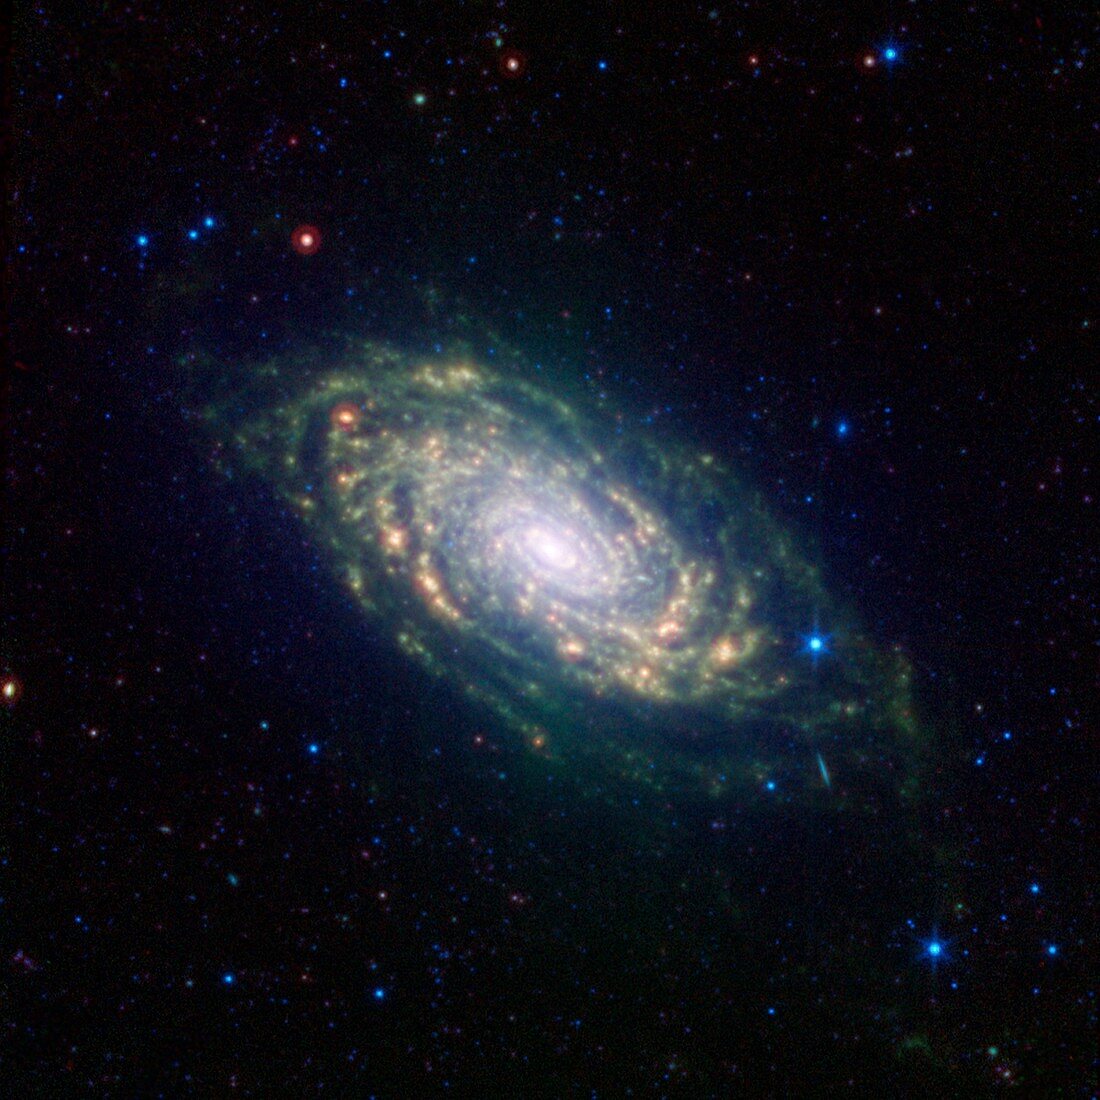 Sunflower Galaxy,infrared image